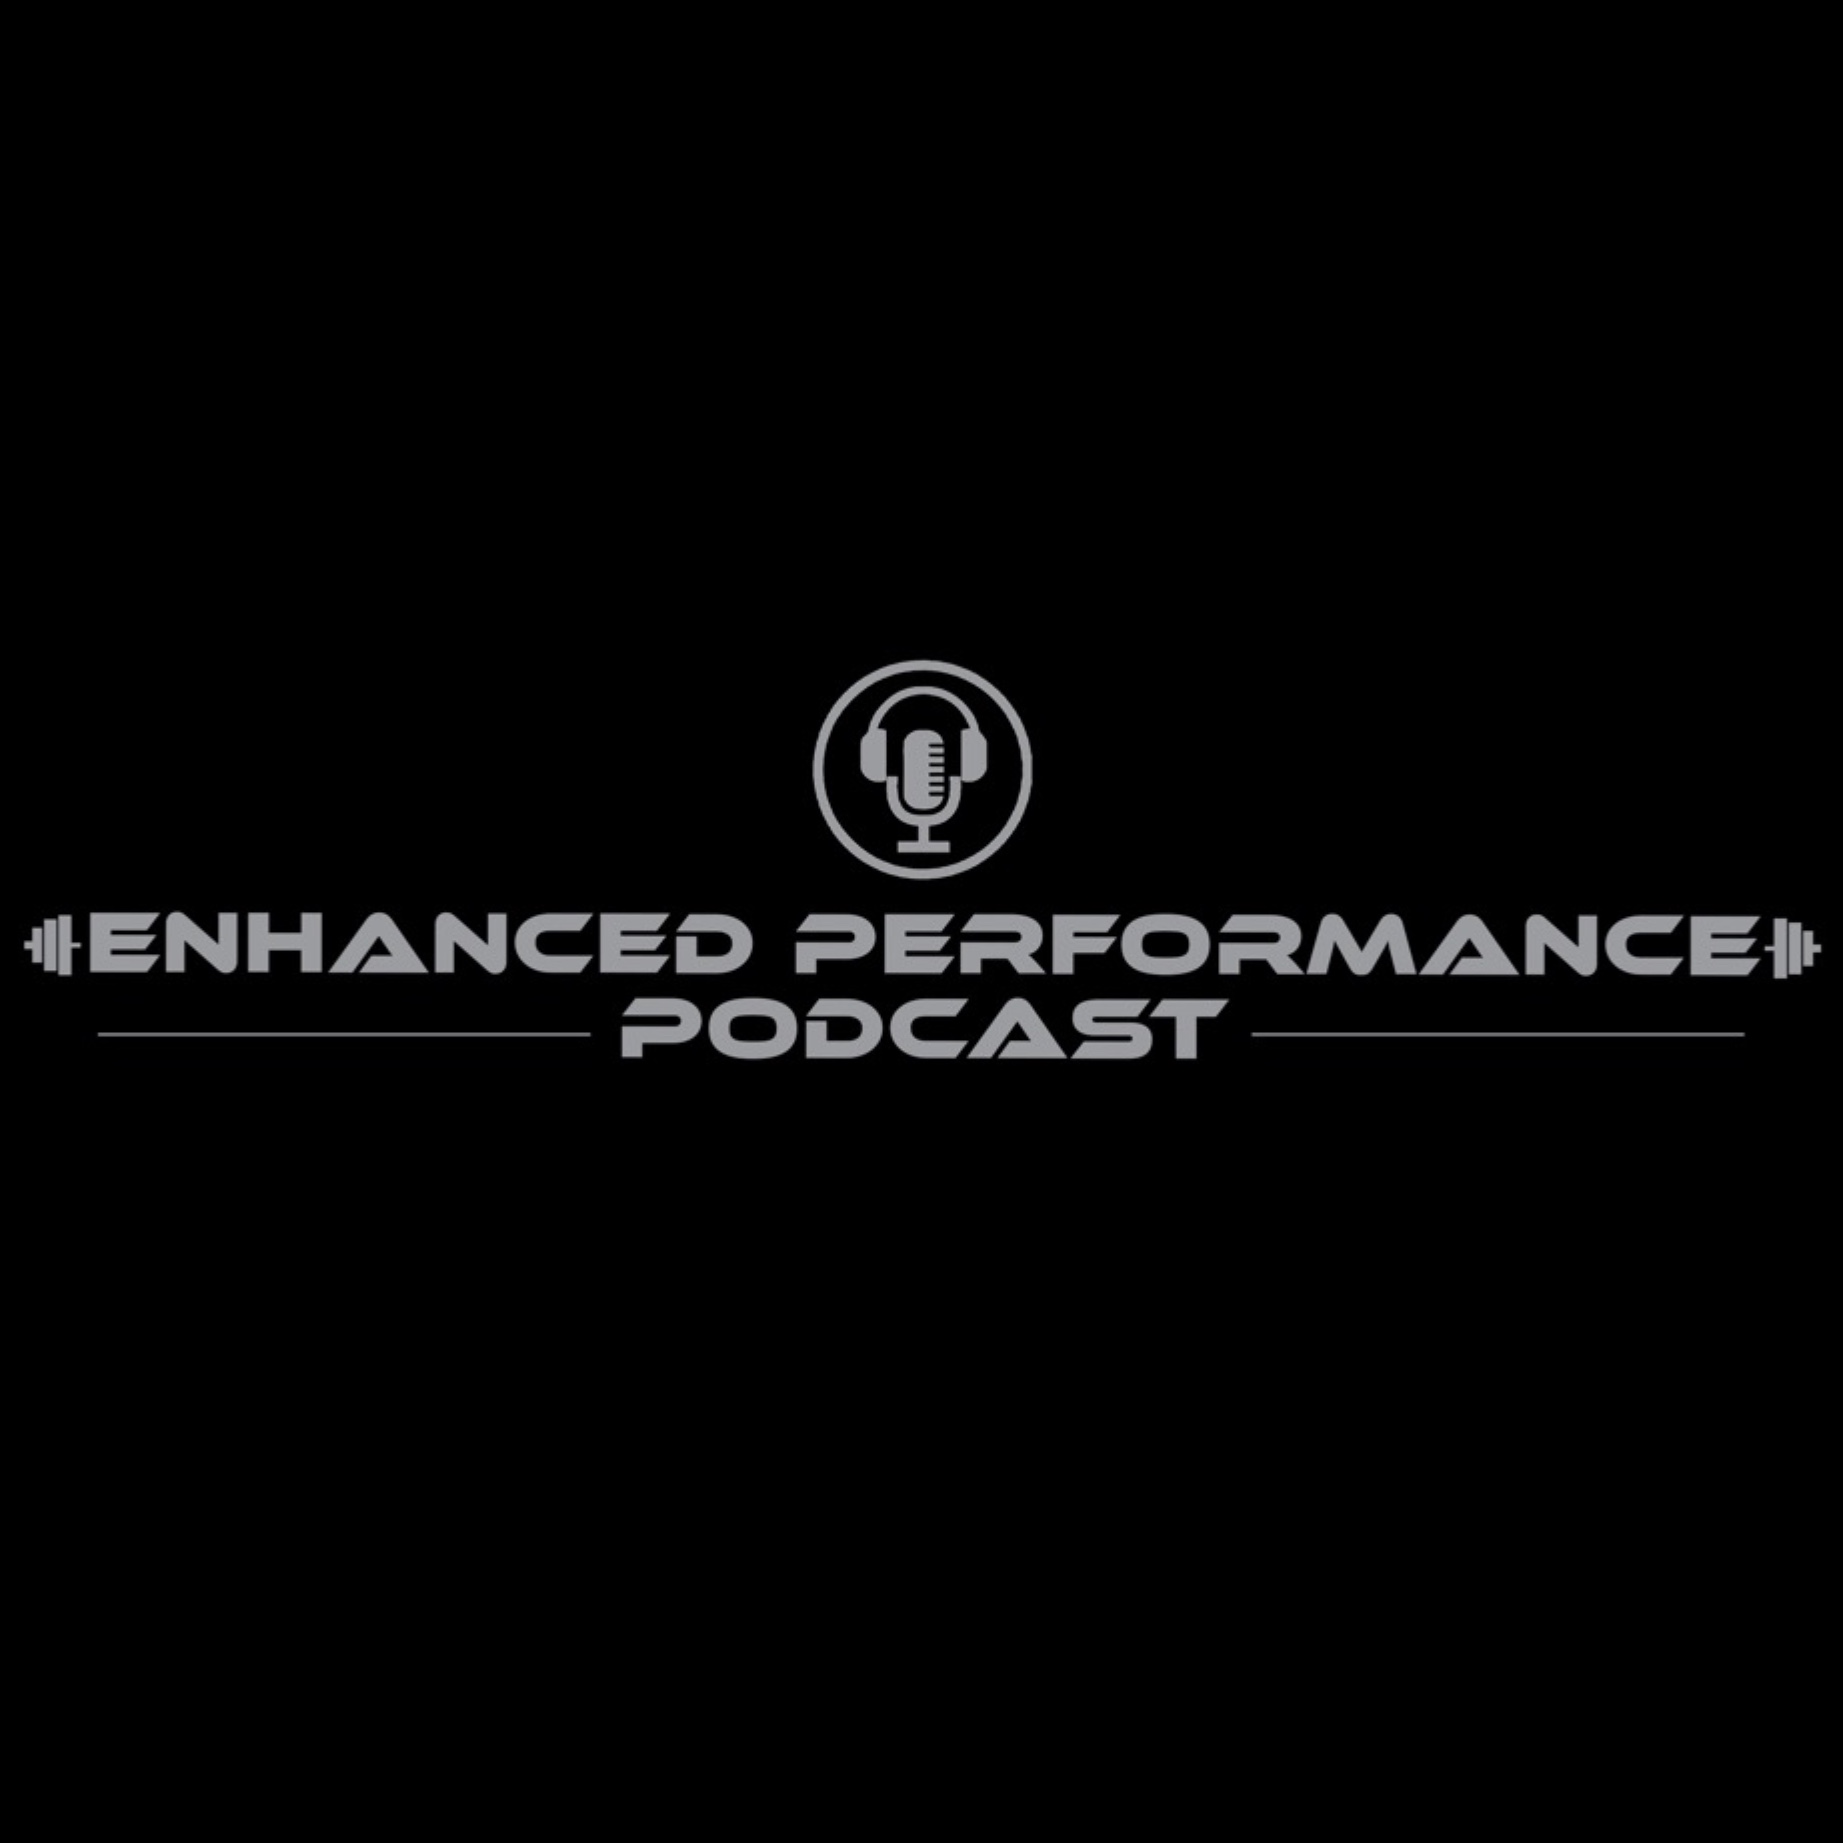 The Enhanced Performance Podcast